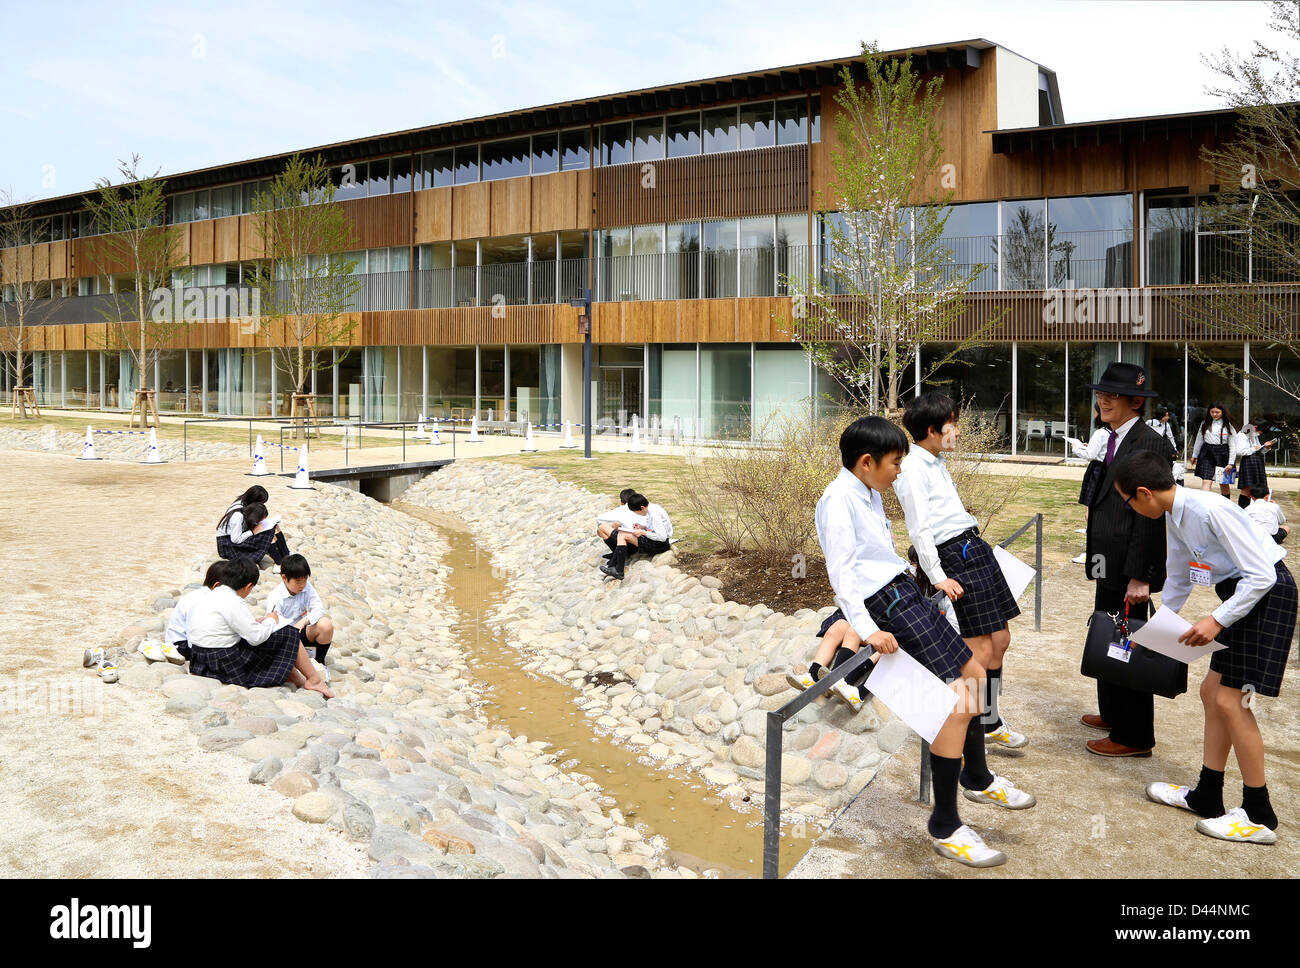 Teikyo University Elementary School, Tokyo, Japan. Architect: Kengo Kuma, 2012. Overall exterior view during biology field work. Stock Photo